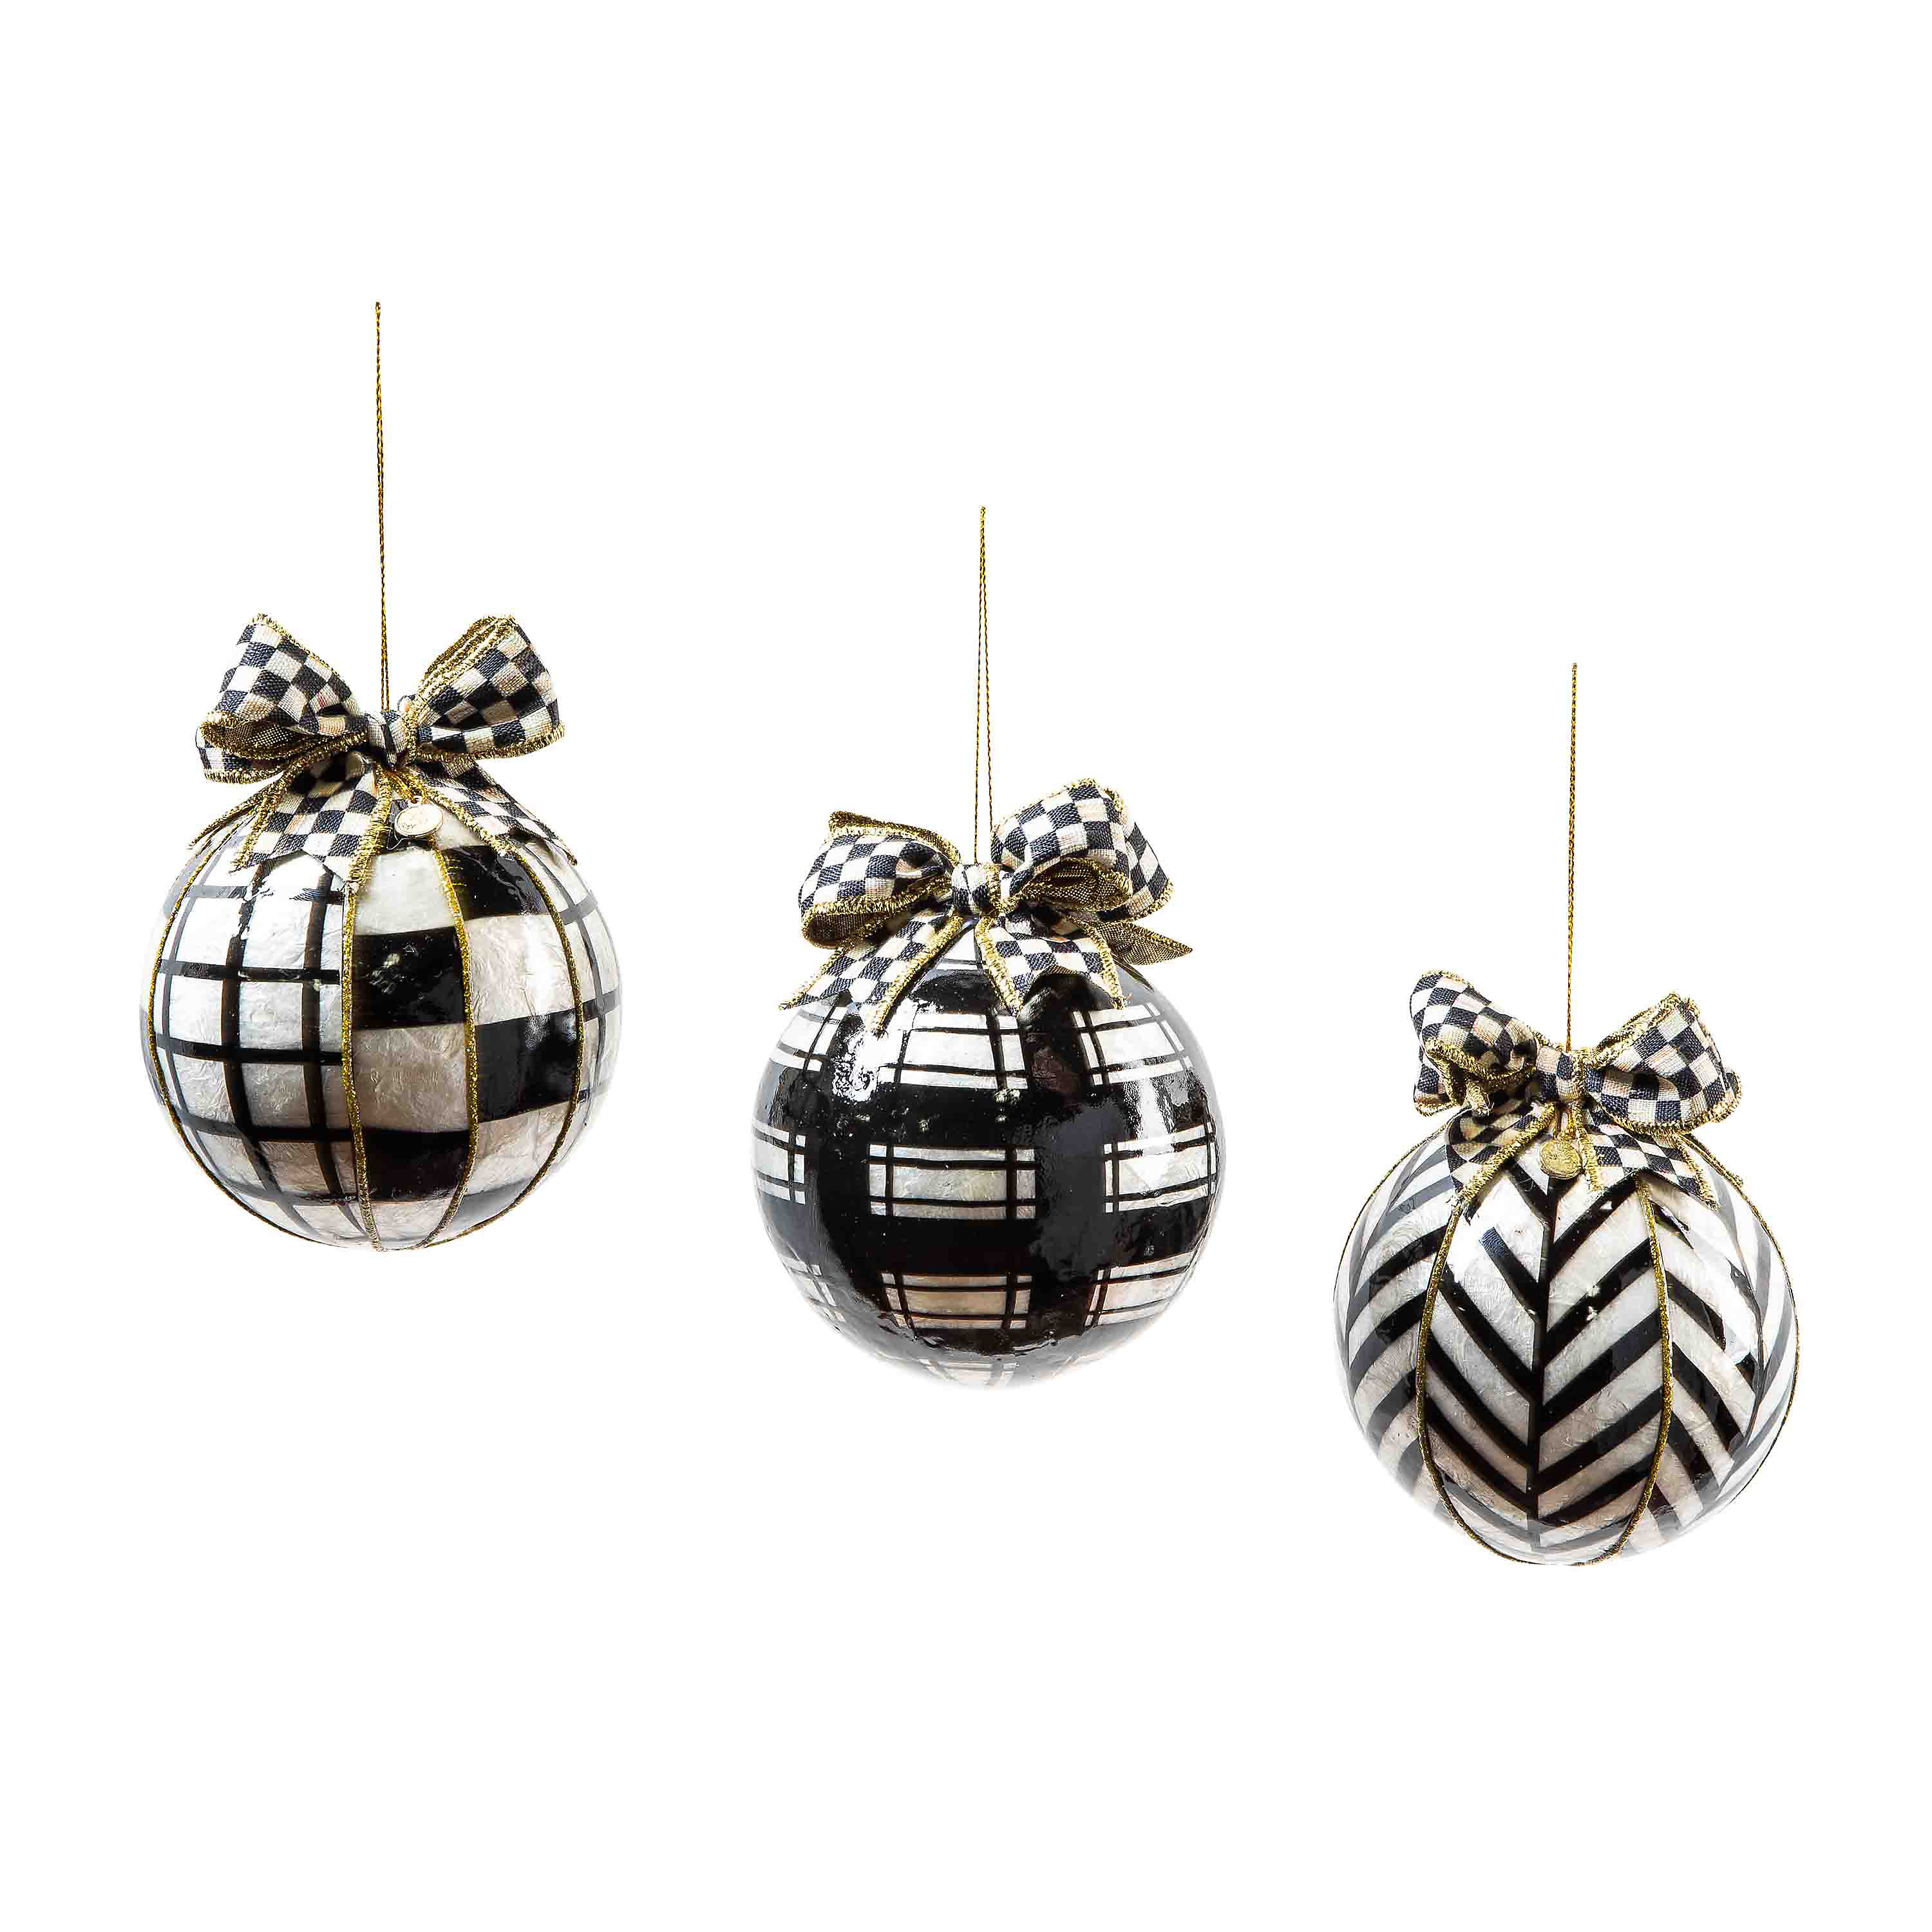 Glam Up Geometric Capiz Ball Ornaments, Set of 3 mackenzie-childs Panama 0